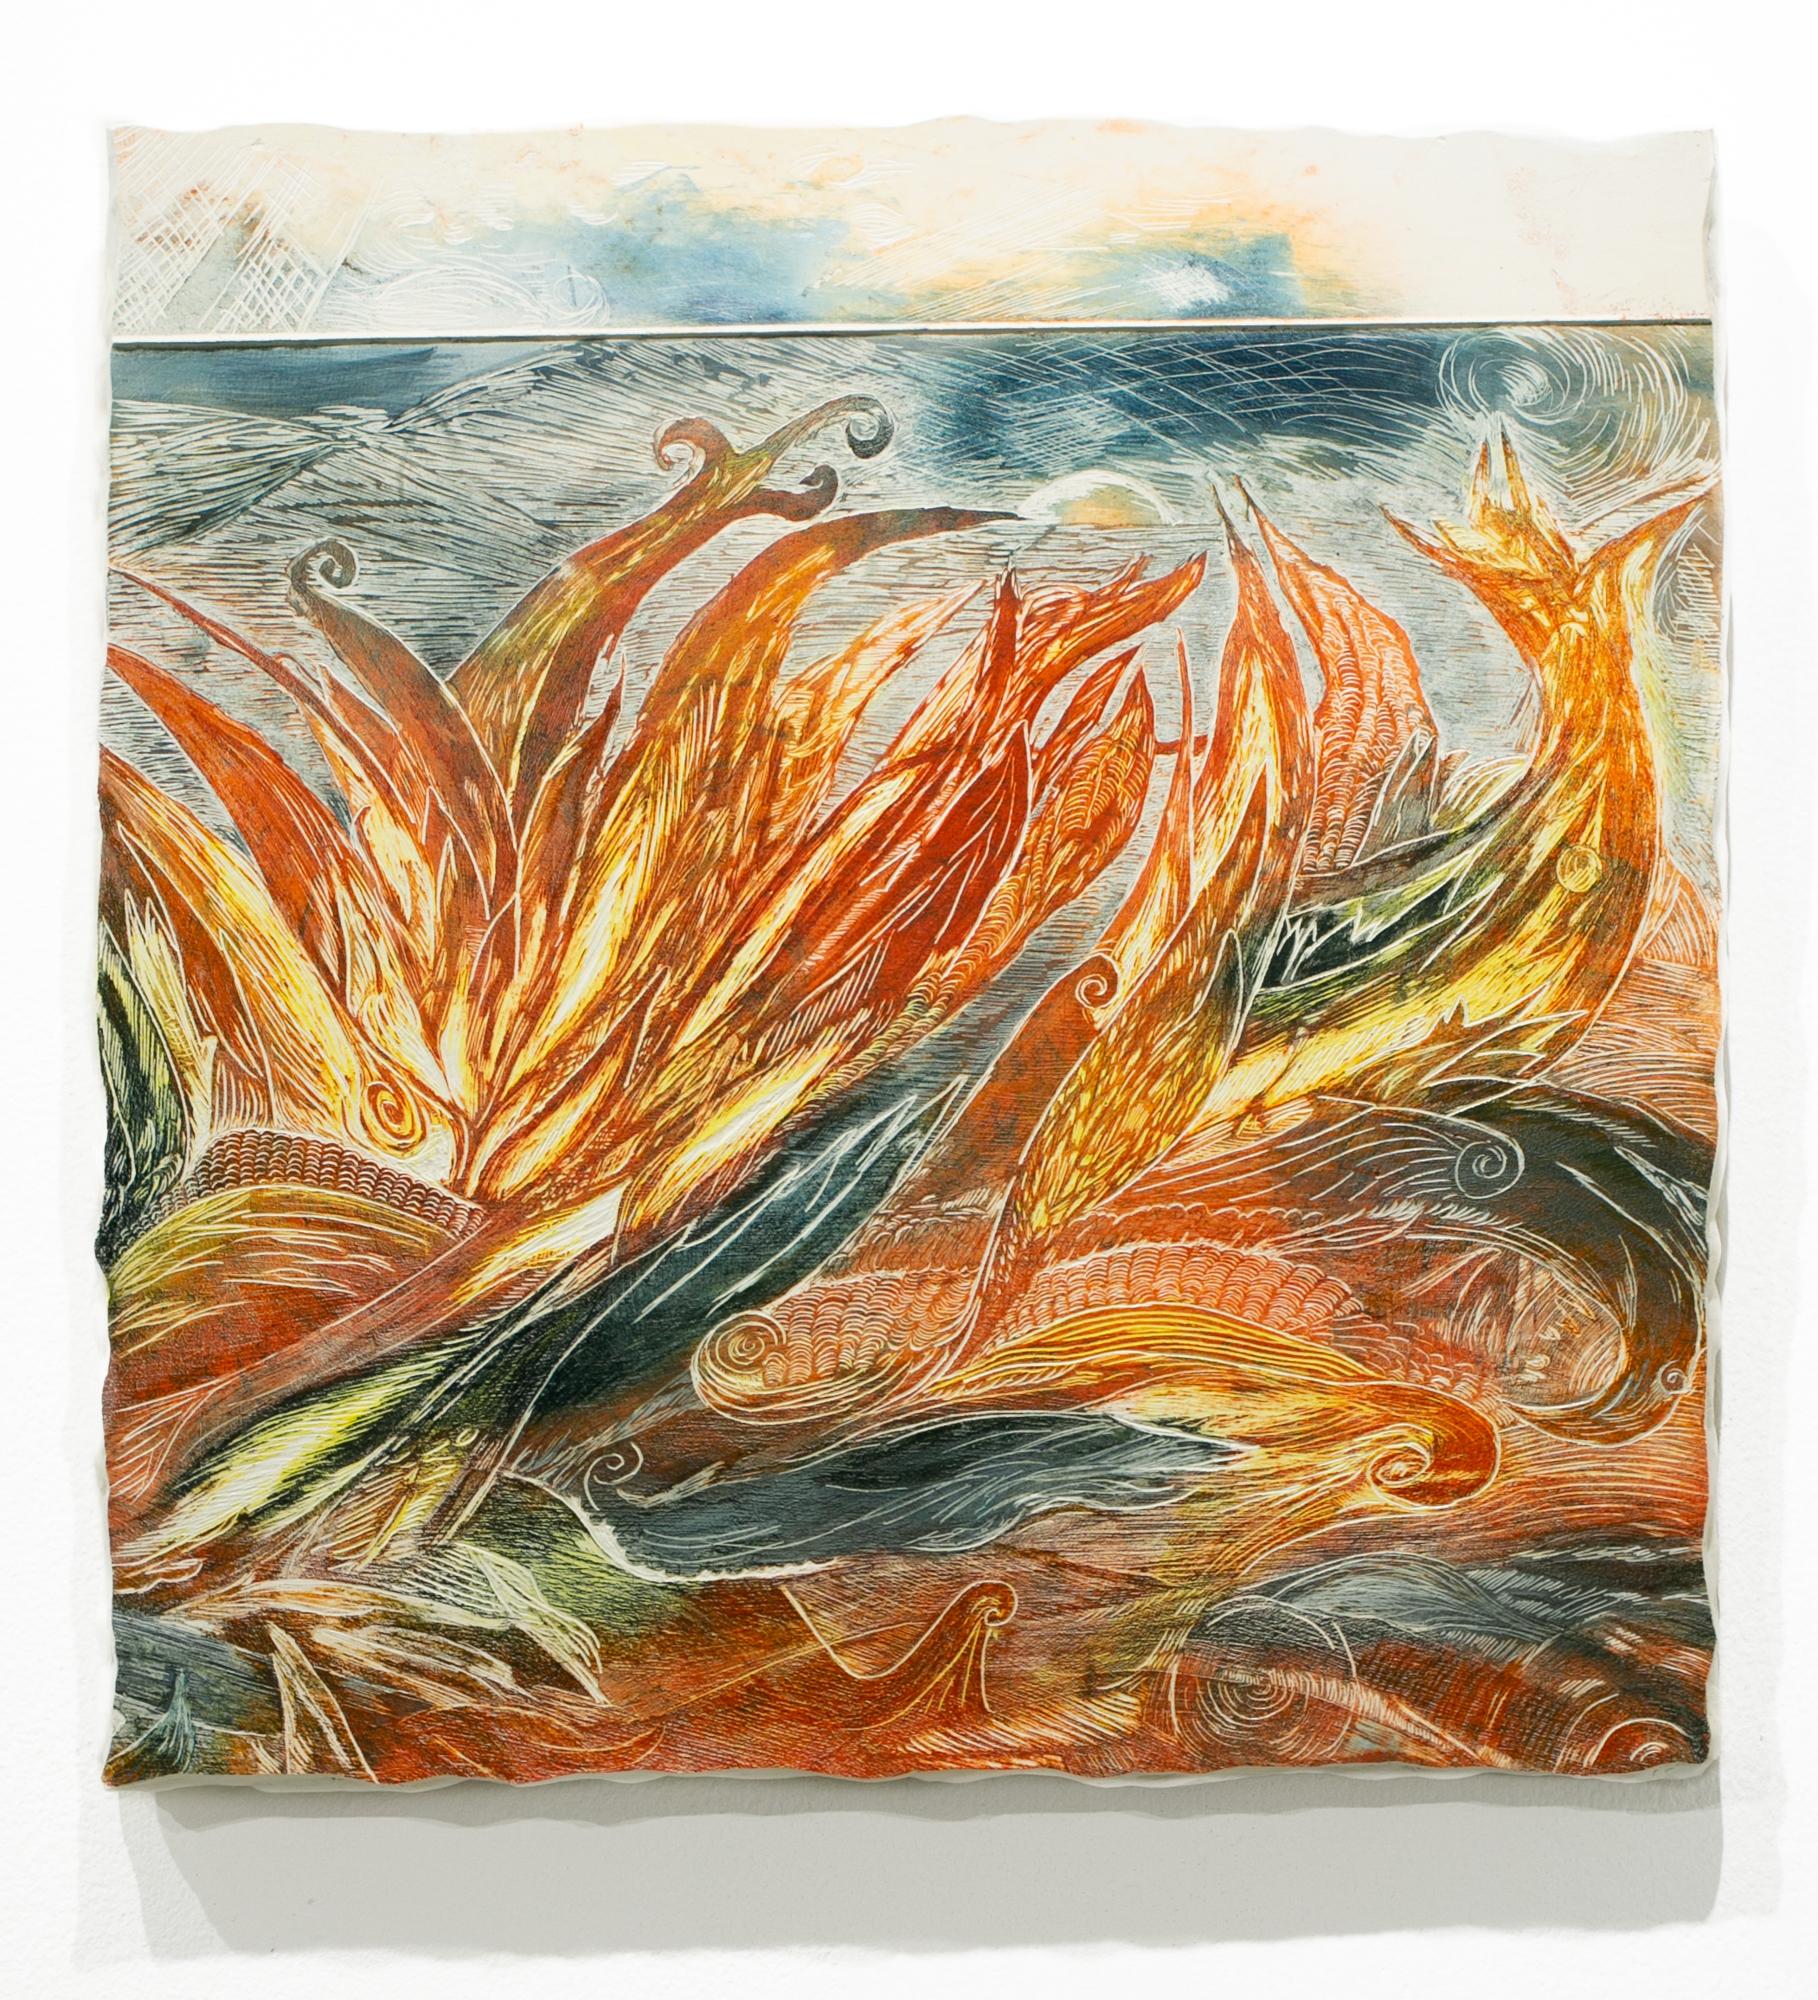 Katie VanVliet Landscape Print - "Wild is the Wind", Warm Colors, Orange, Abstracted Landscape, Intaglio Print